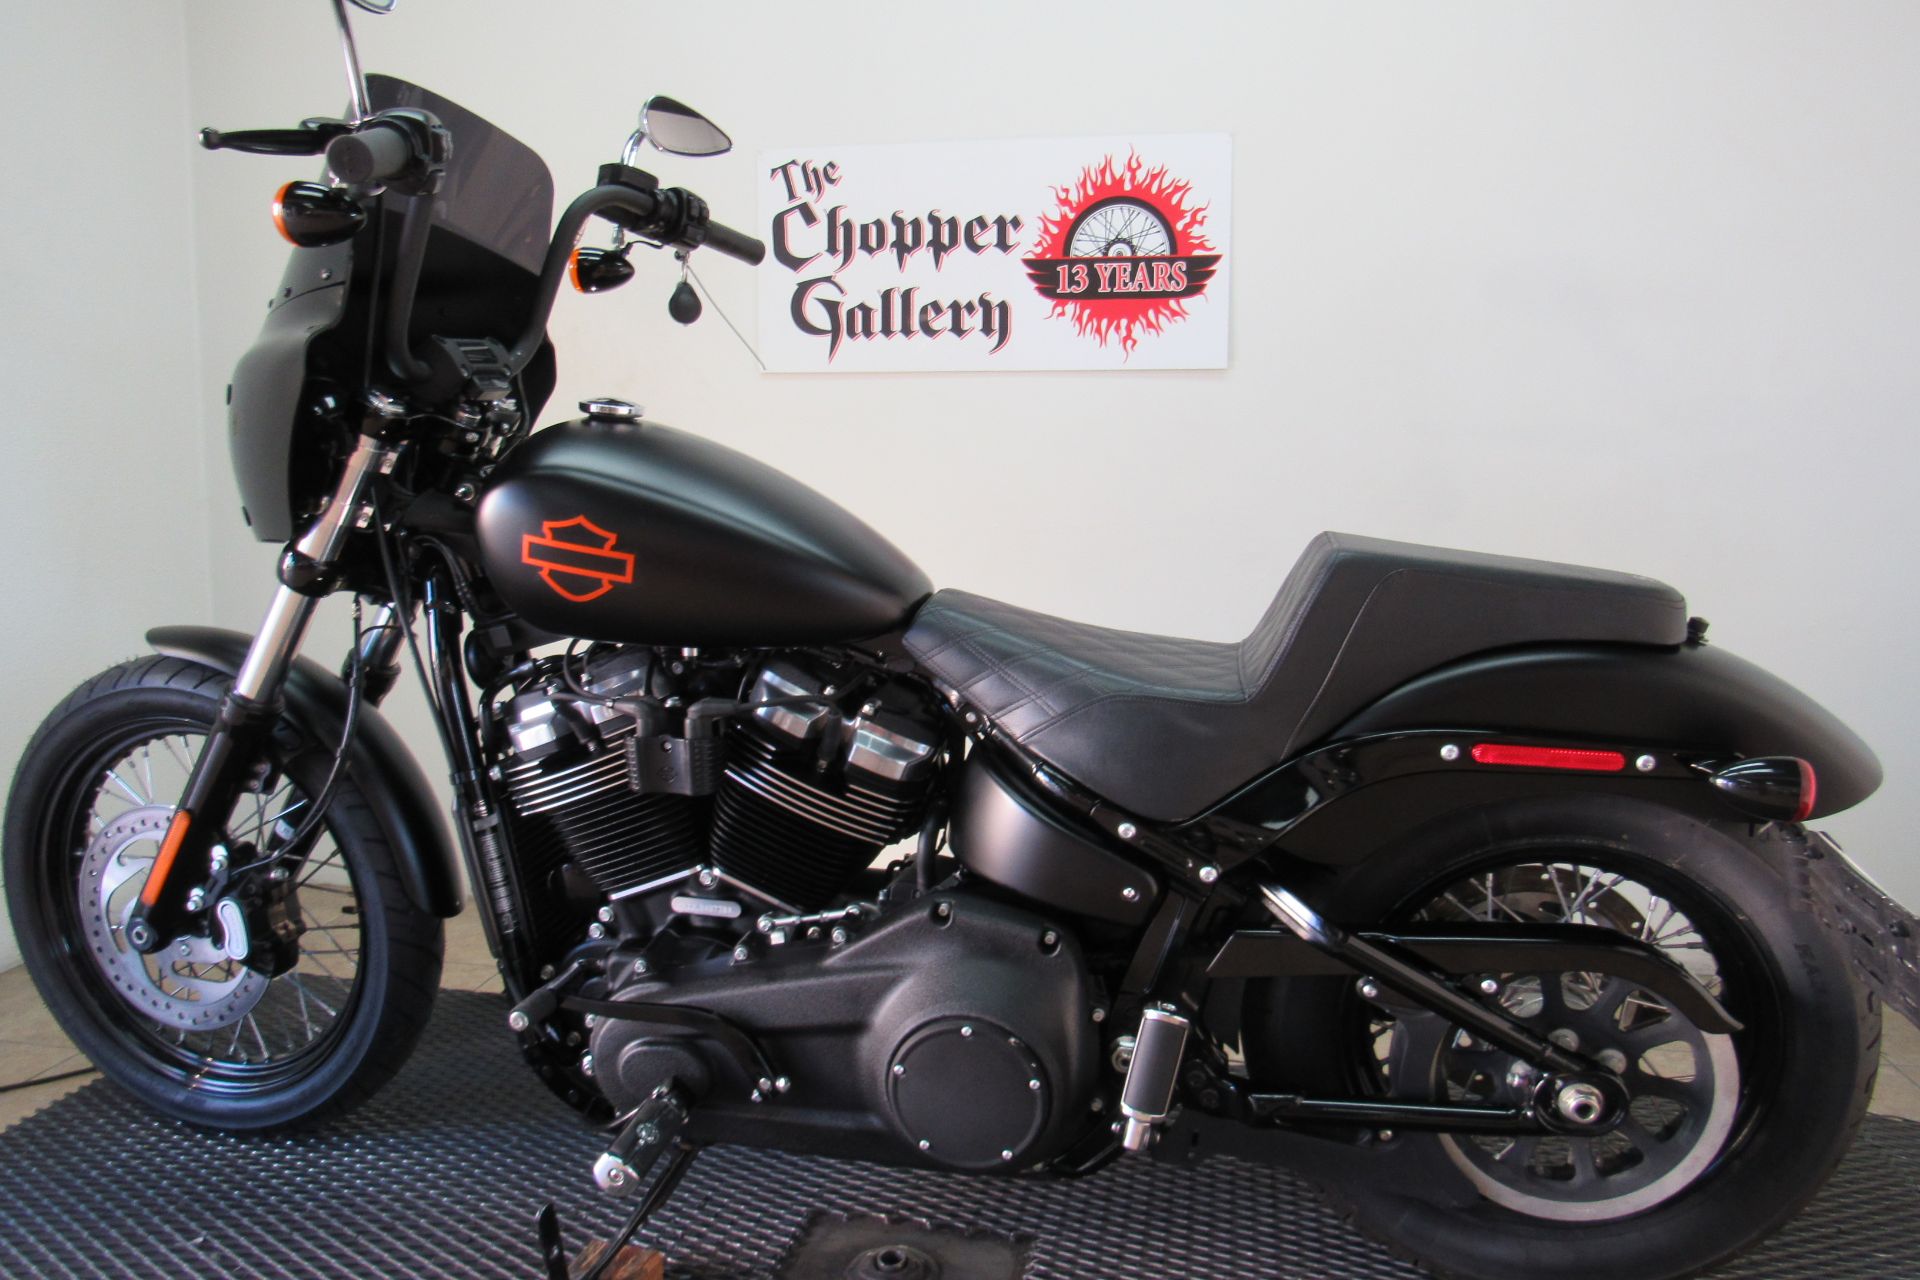 2020 Harley-Davidson Street Bob® in Temecula, California - Photo 6